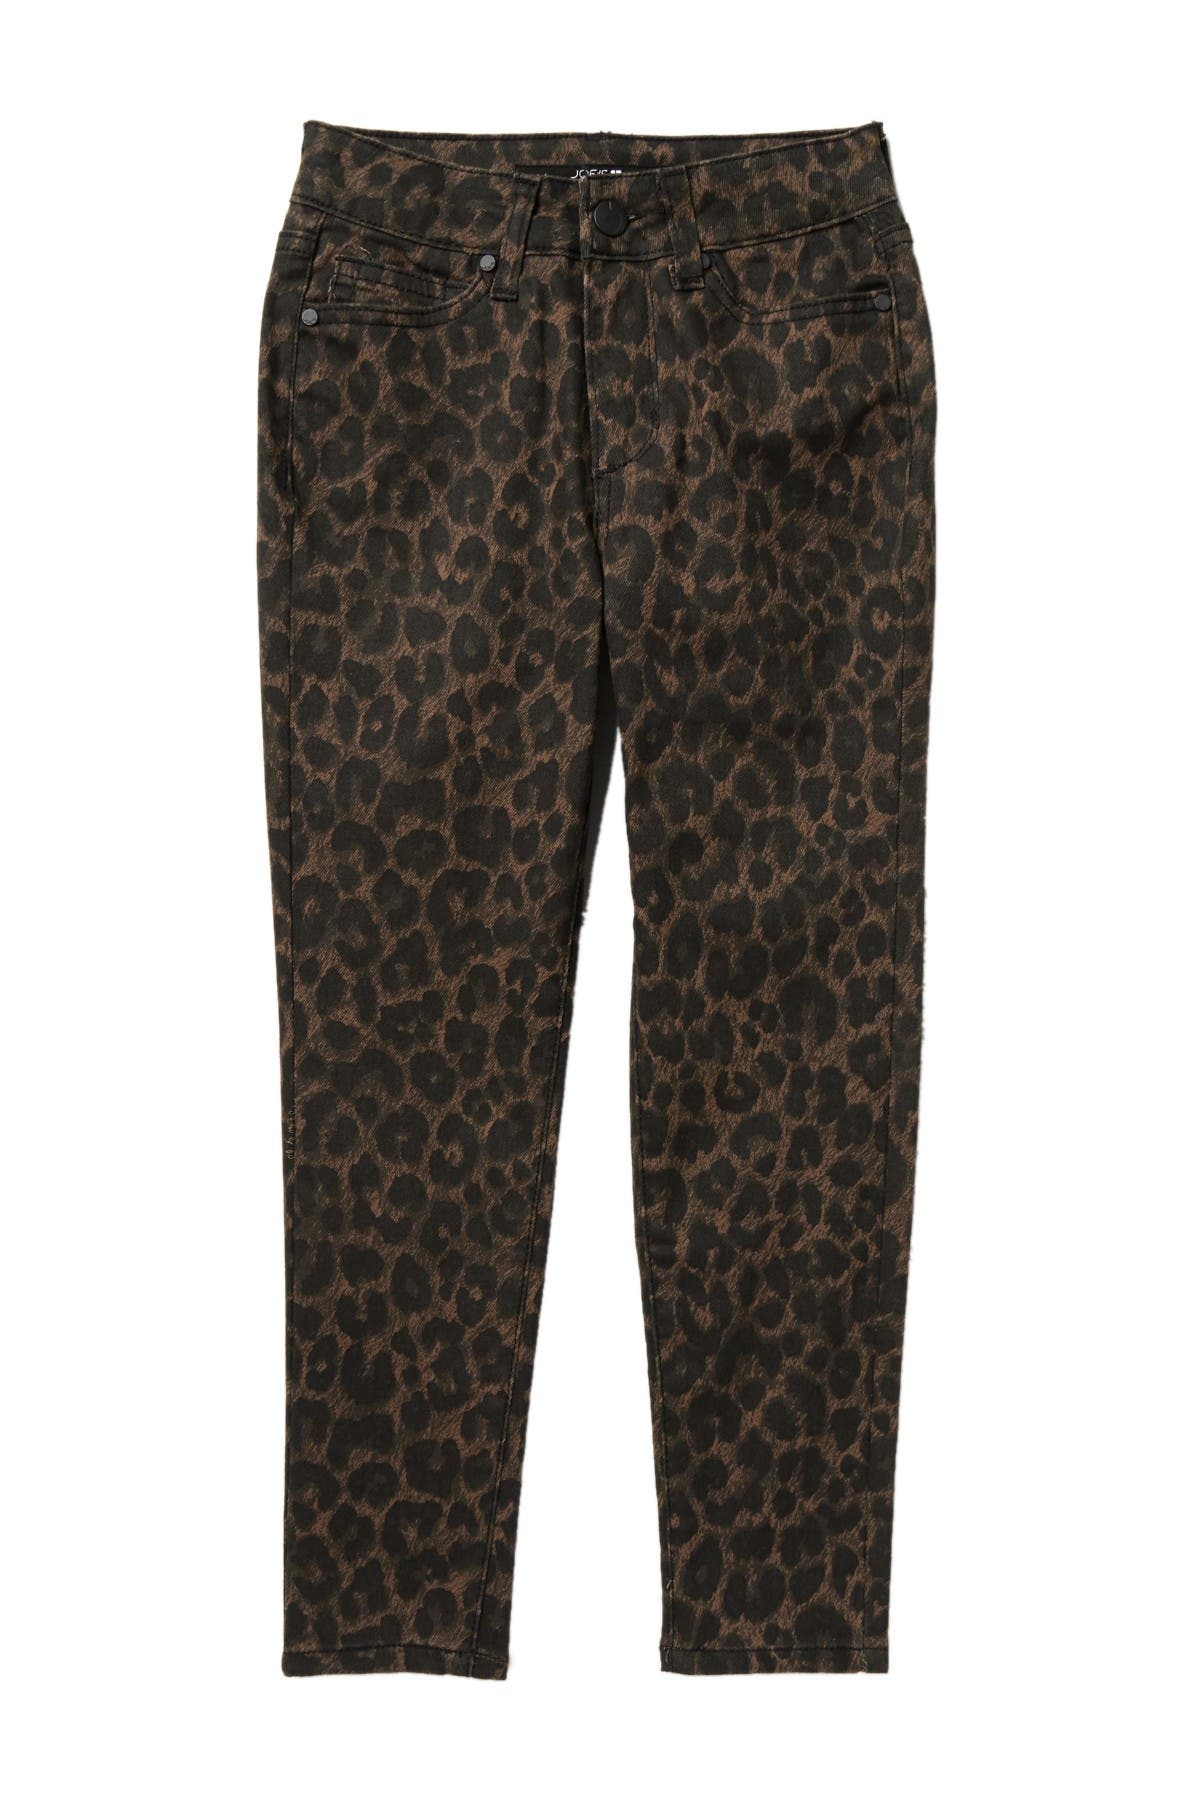 joe's jeans leopard print